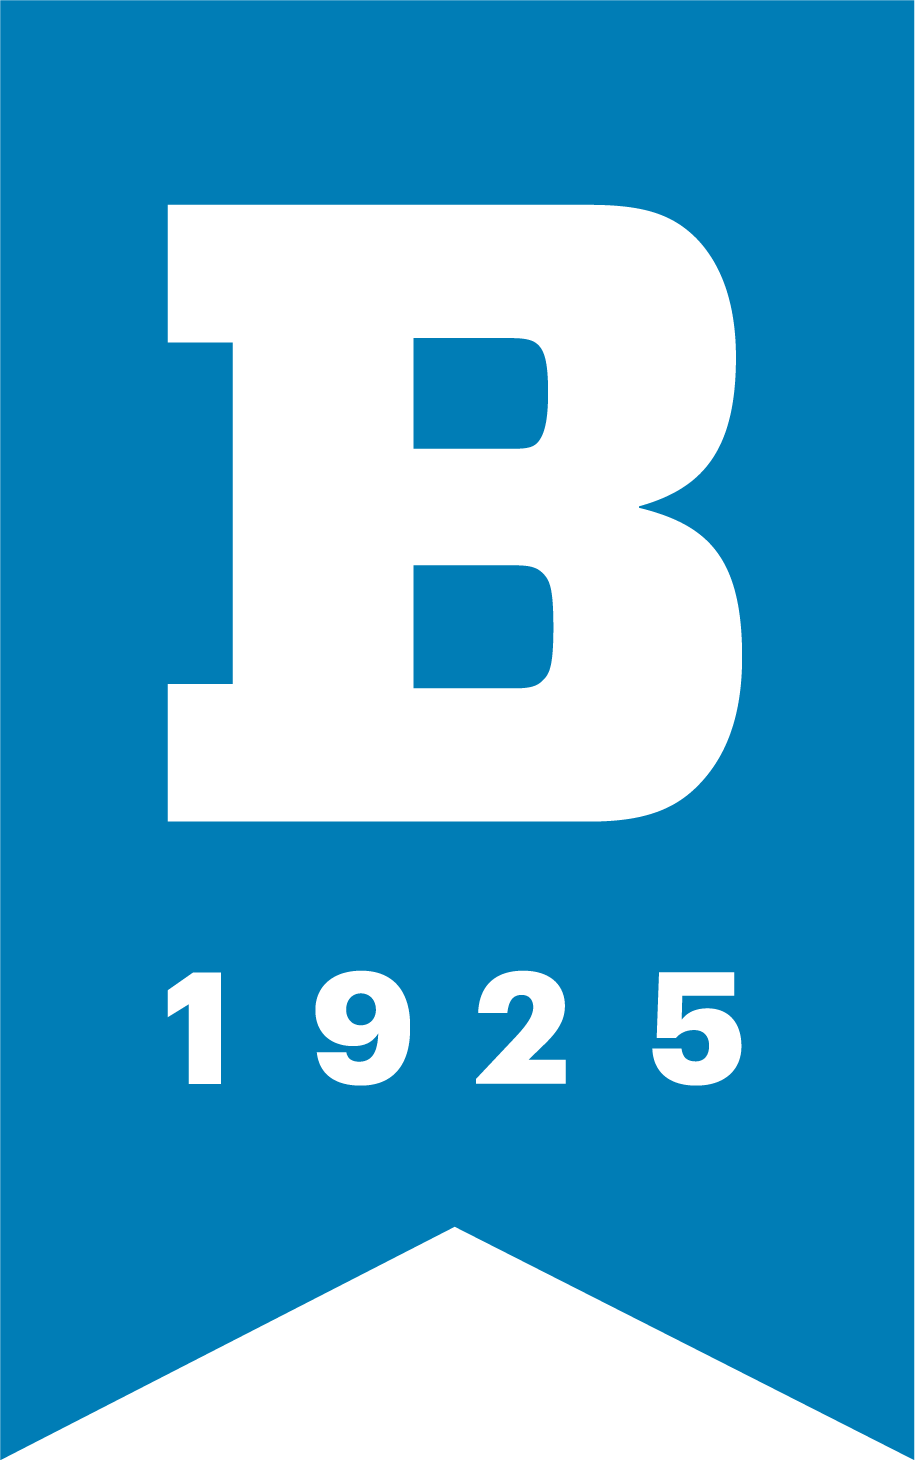 University of Baltimore emblem logo